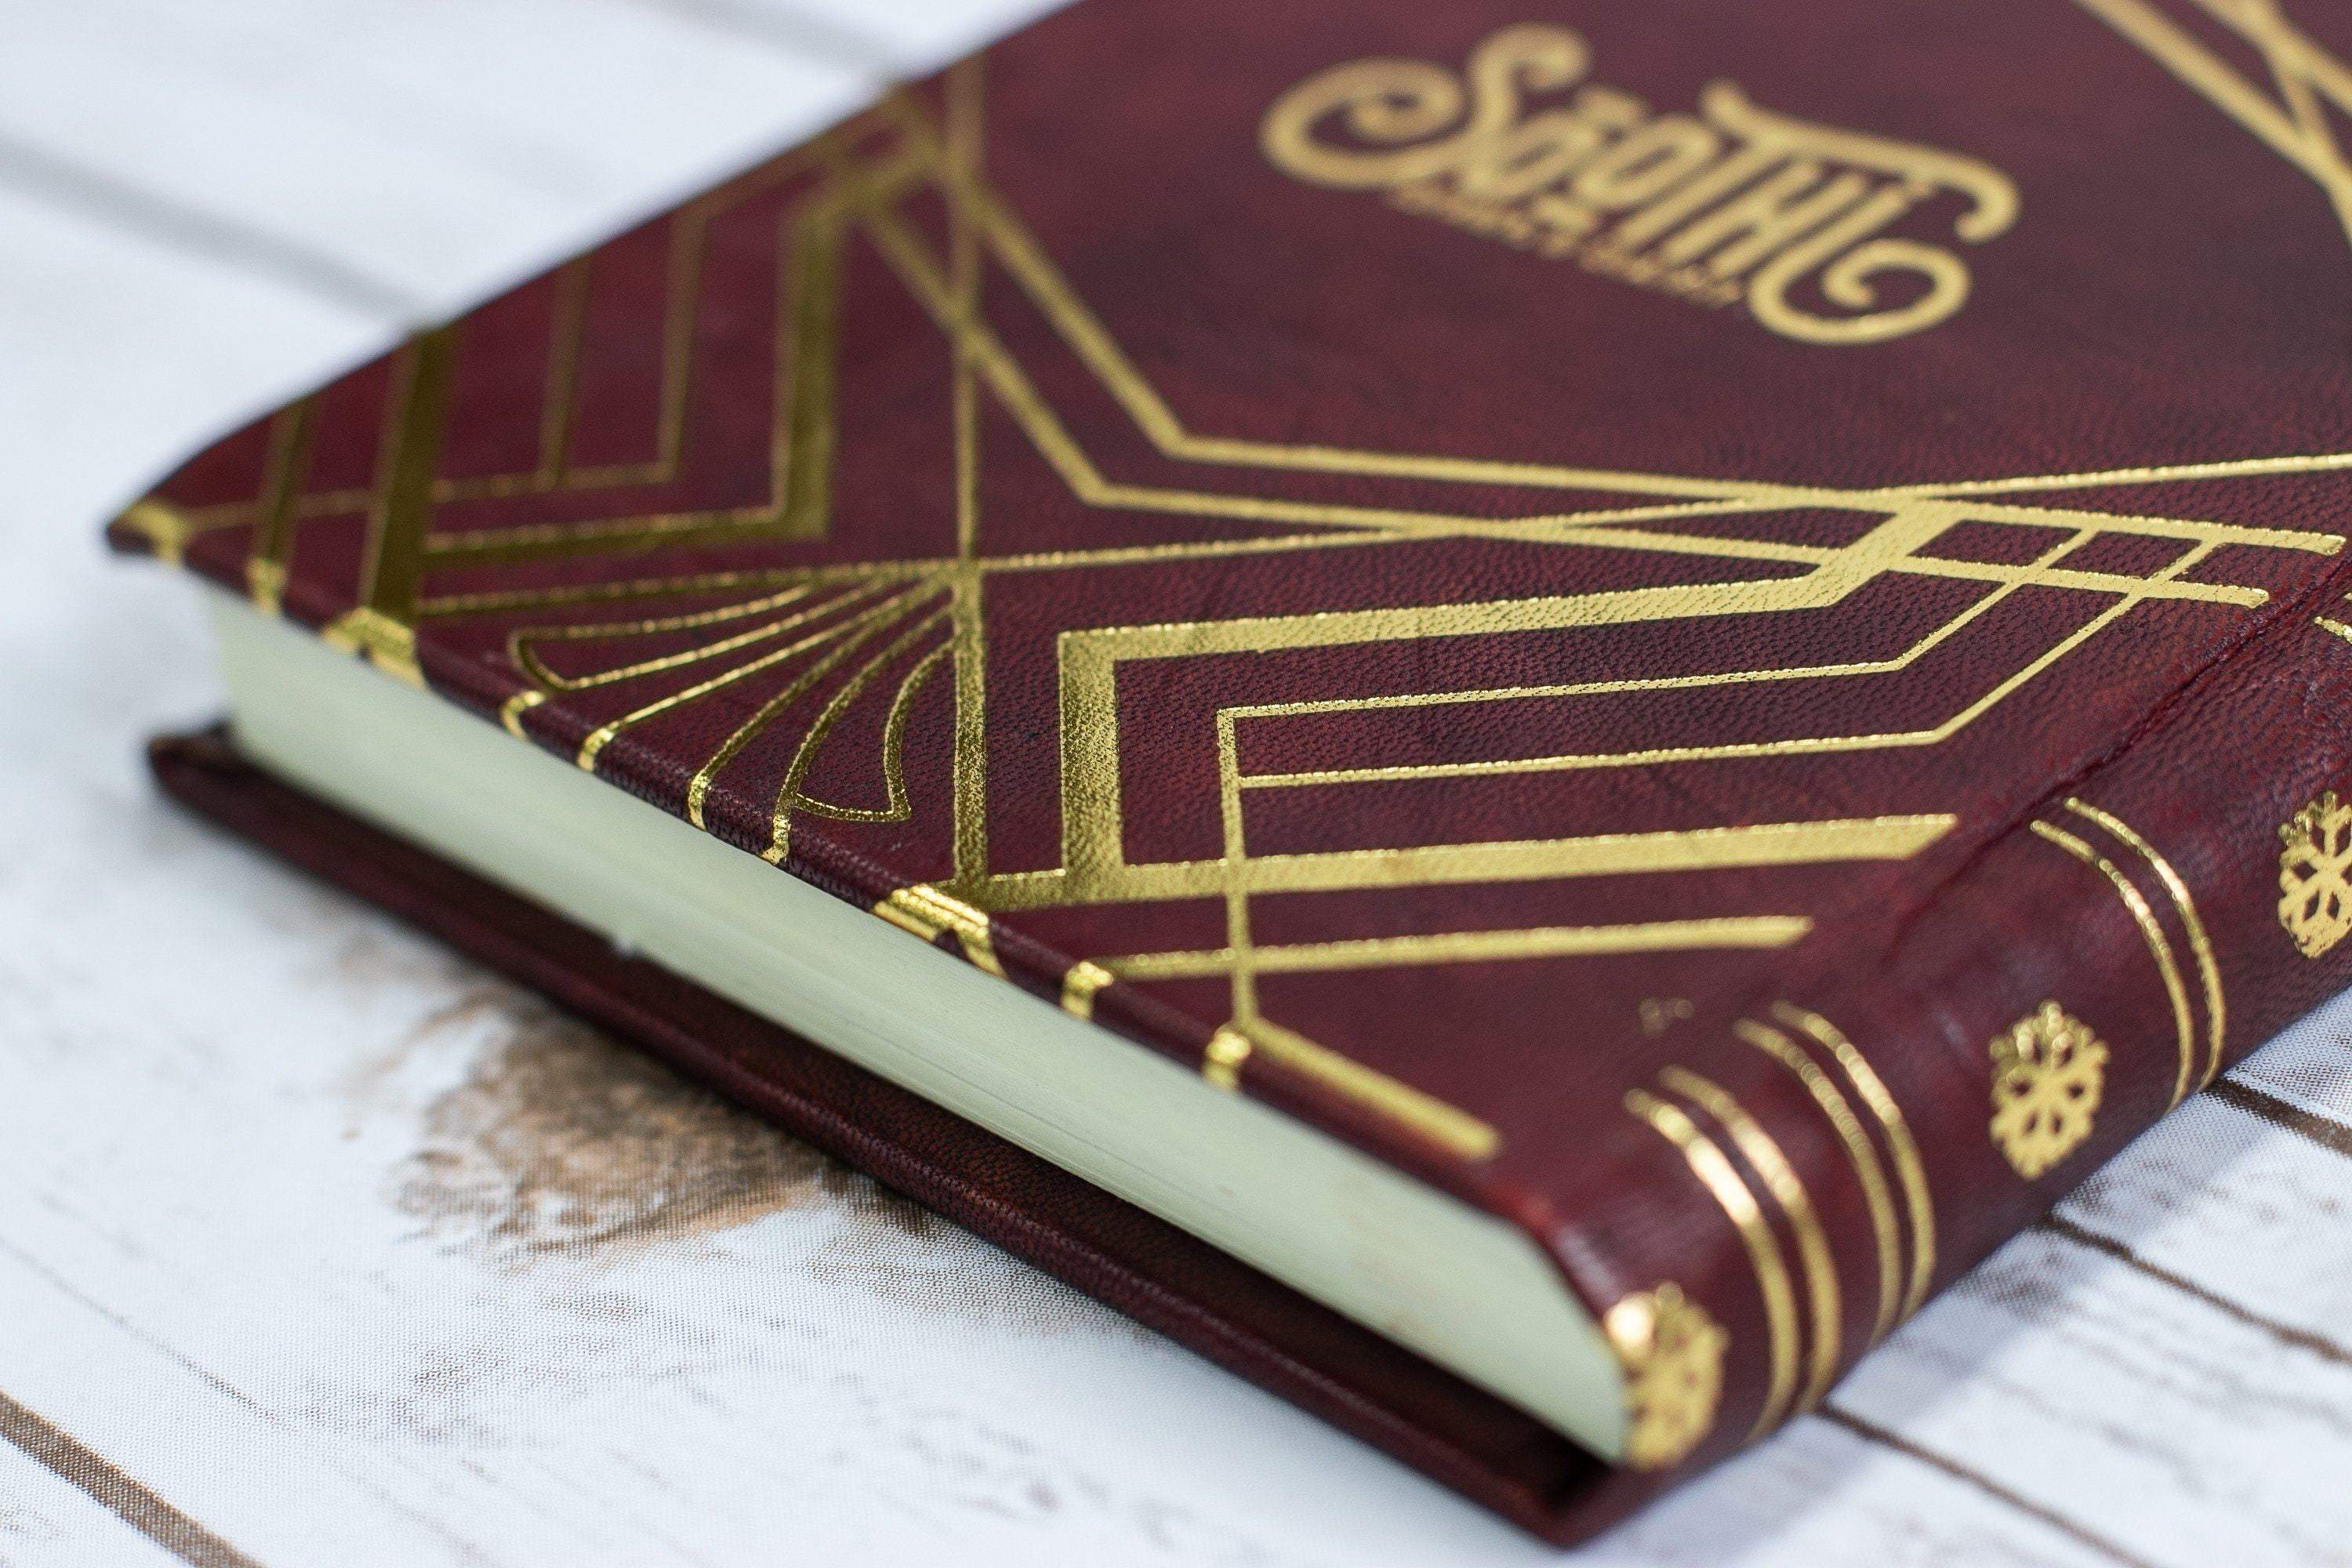 Vintage Oscar Wilde Dorian Gray Handmade Leather Journal